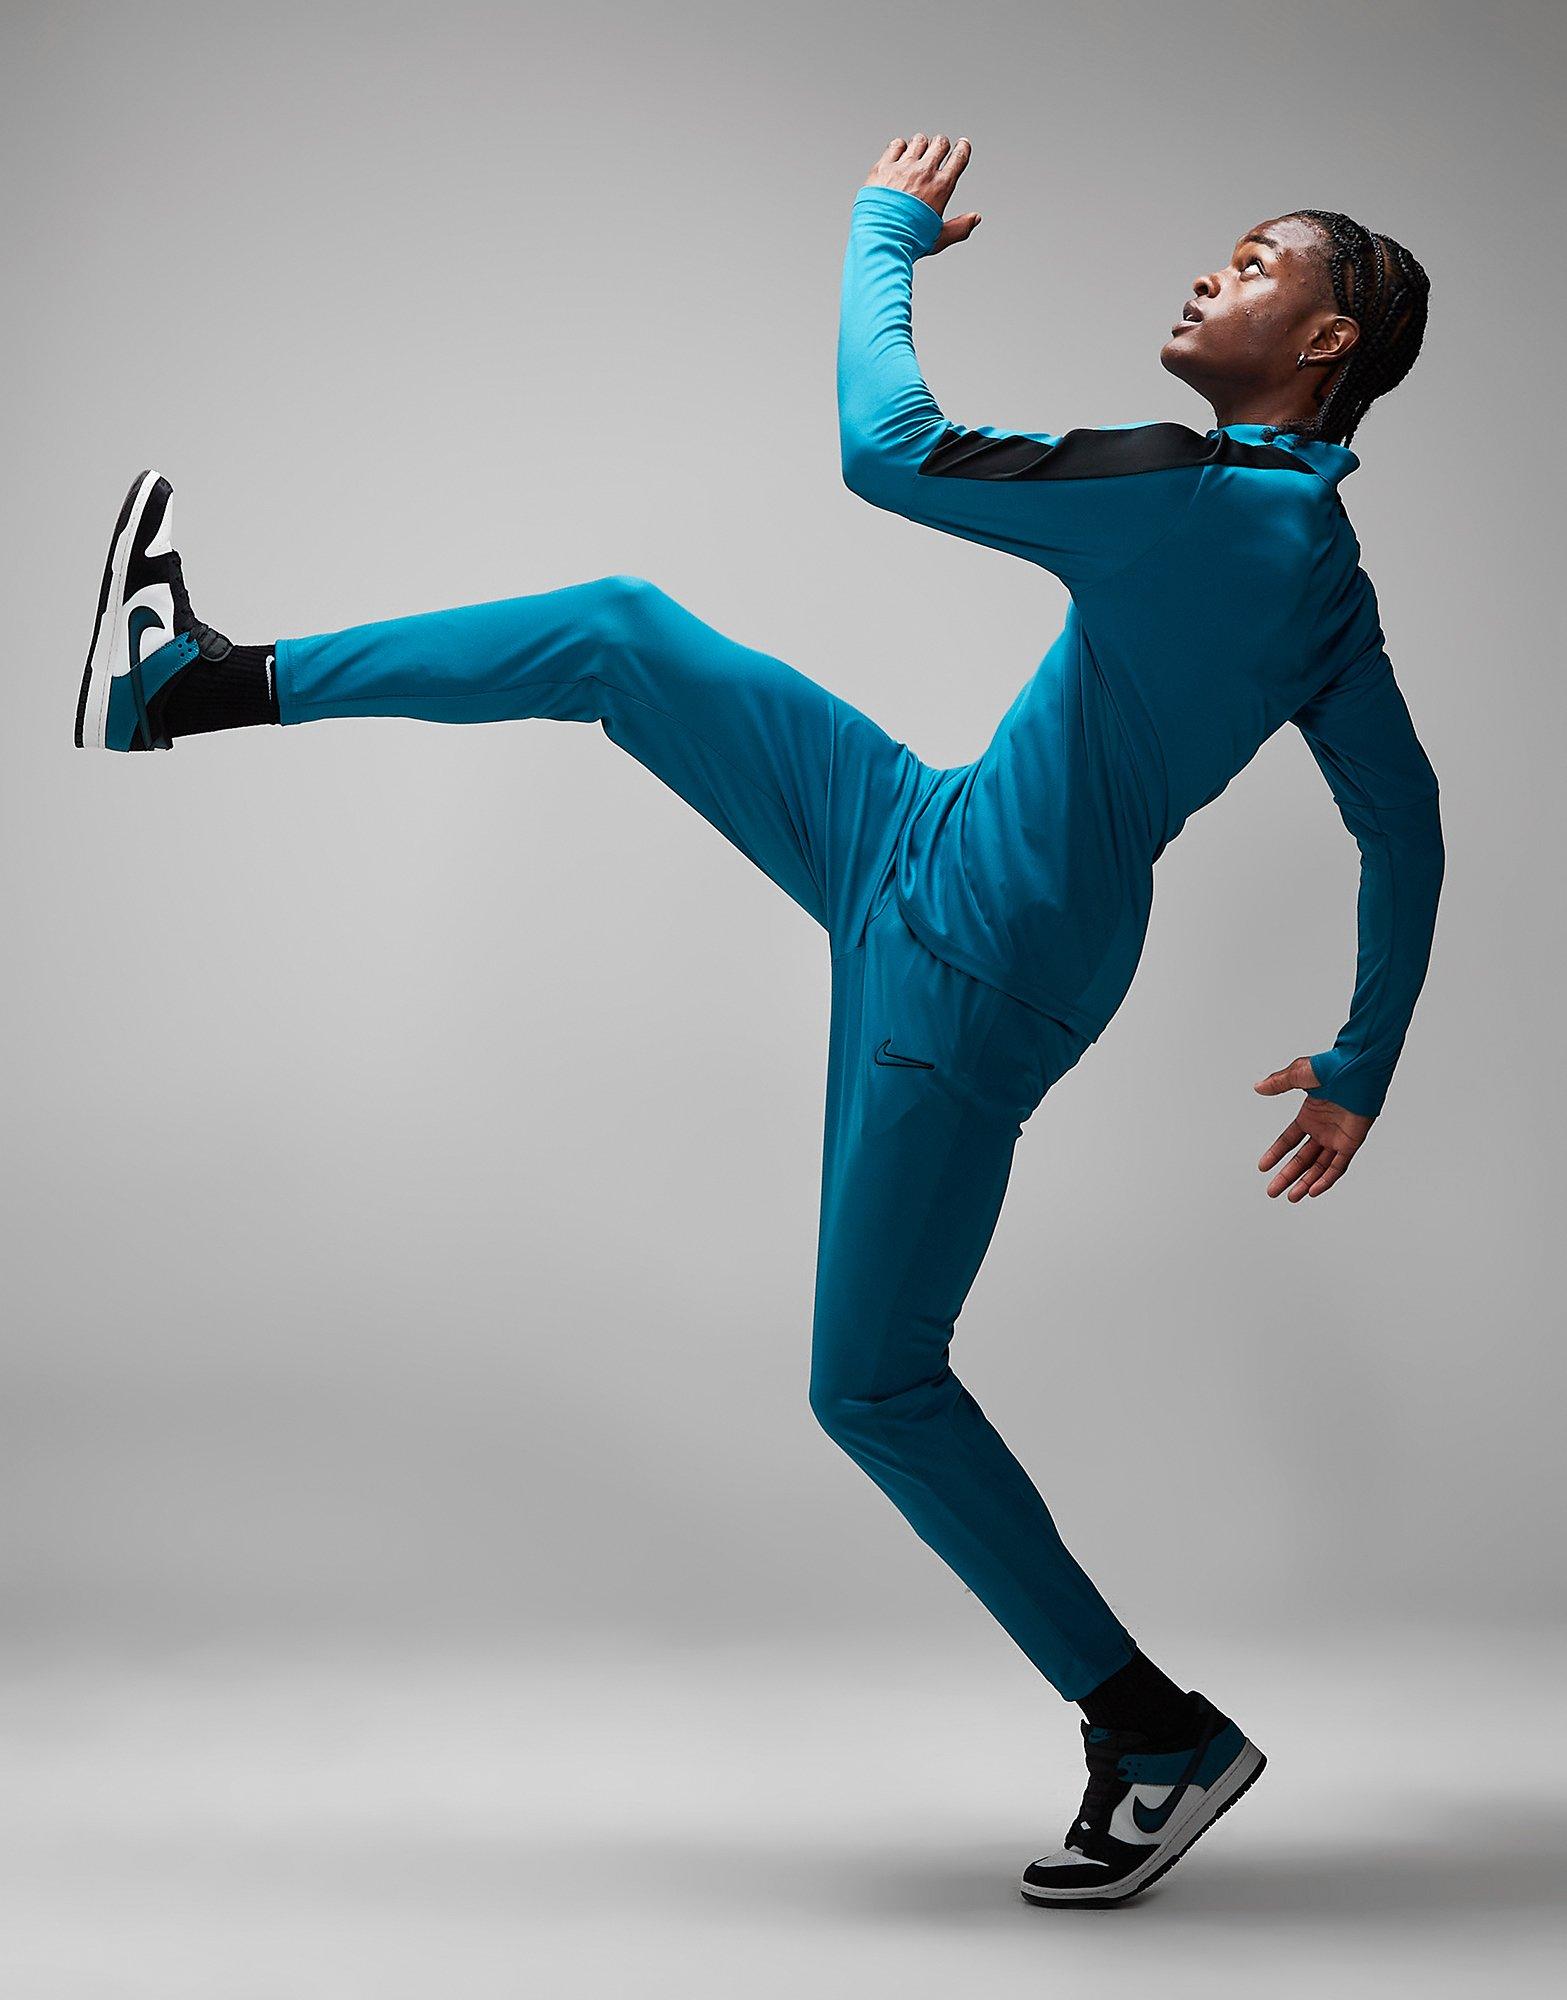 Nike Track Pants Dri-FIT Academy - Industrial Blue/Black